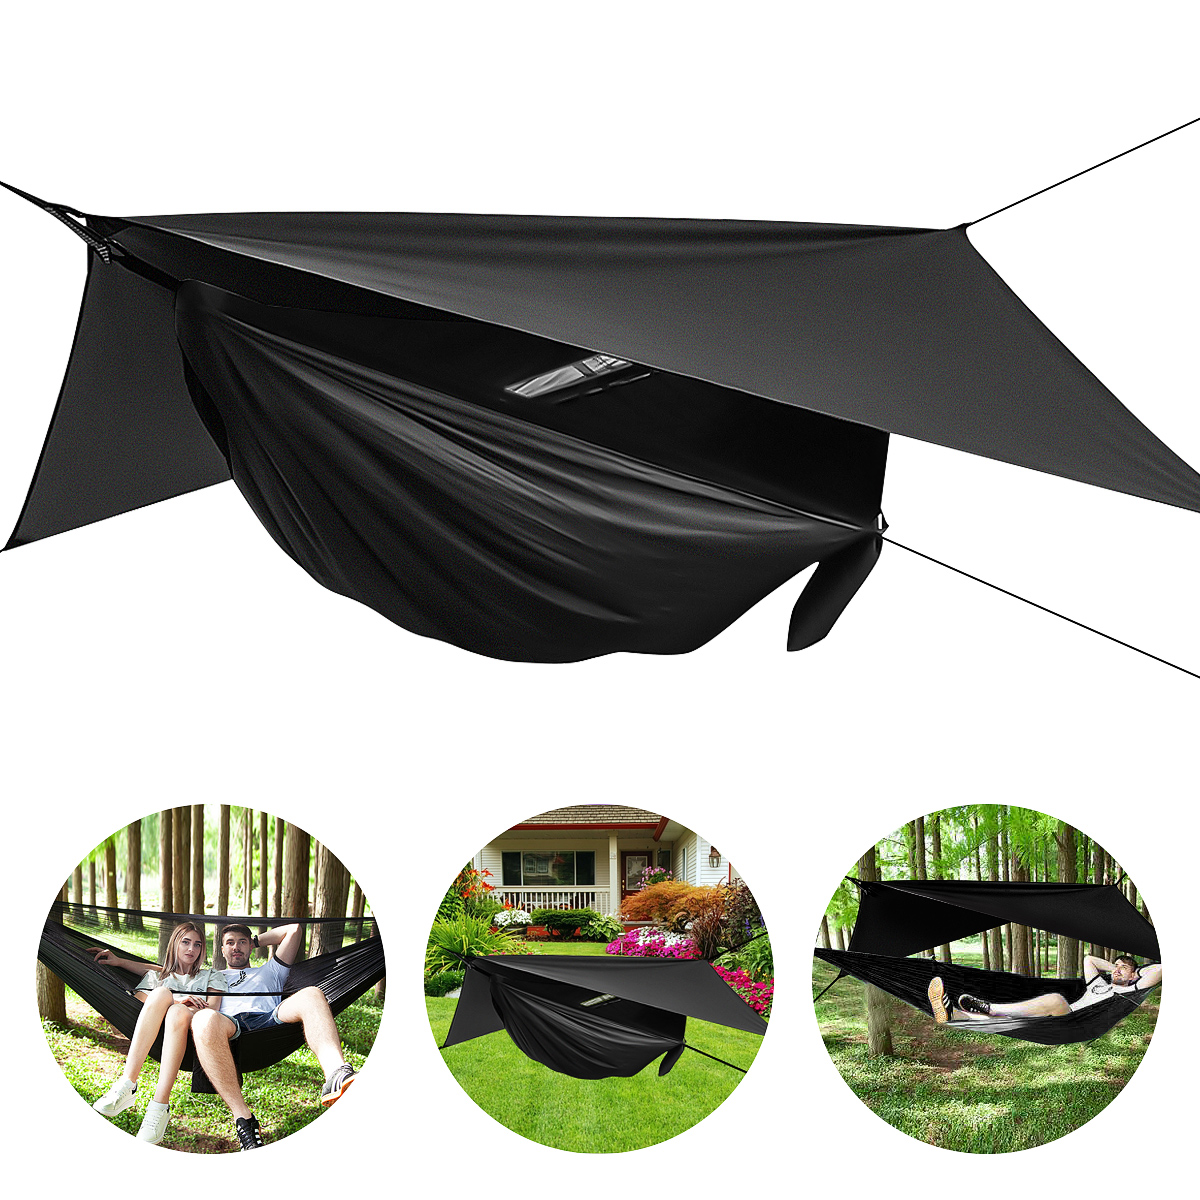 2 Persons 2-in-1 Camping Canopy Hammock Tent Set Lightweight Portable Hammock Outdoor Camping Travel Backyard Hammock - Black